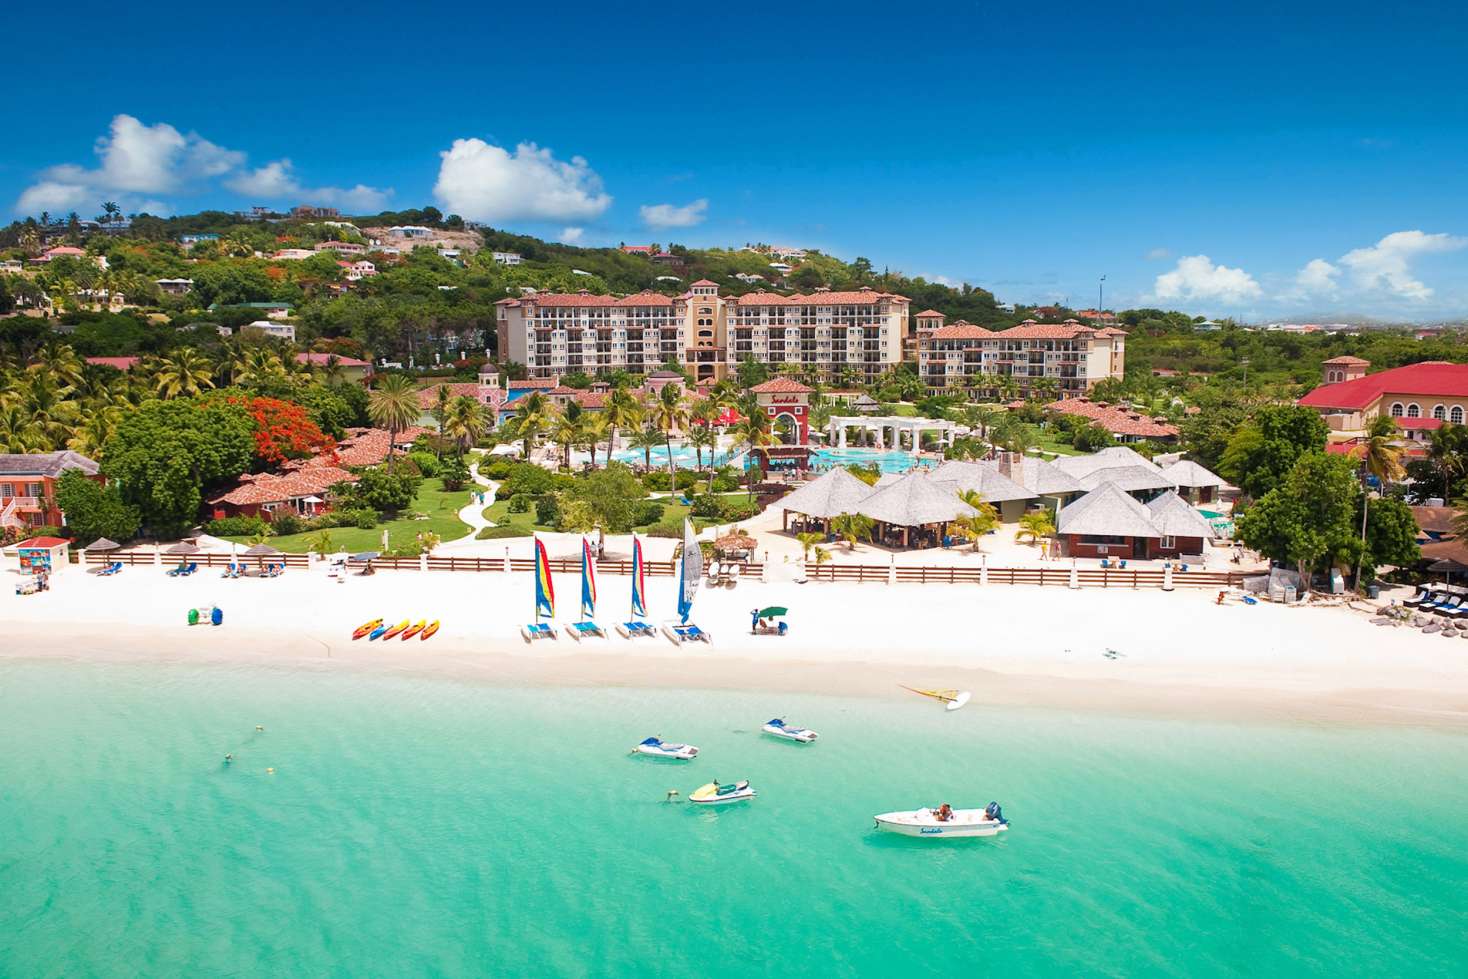 Sandals Grande Antigua Resort & Spa, Saint John's, Antigua | Caribbean ...